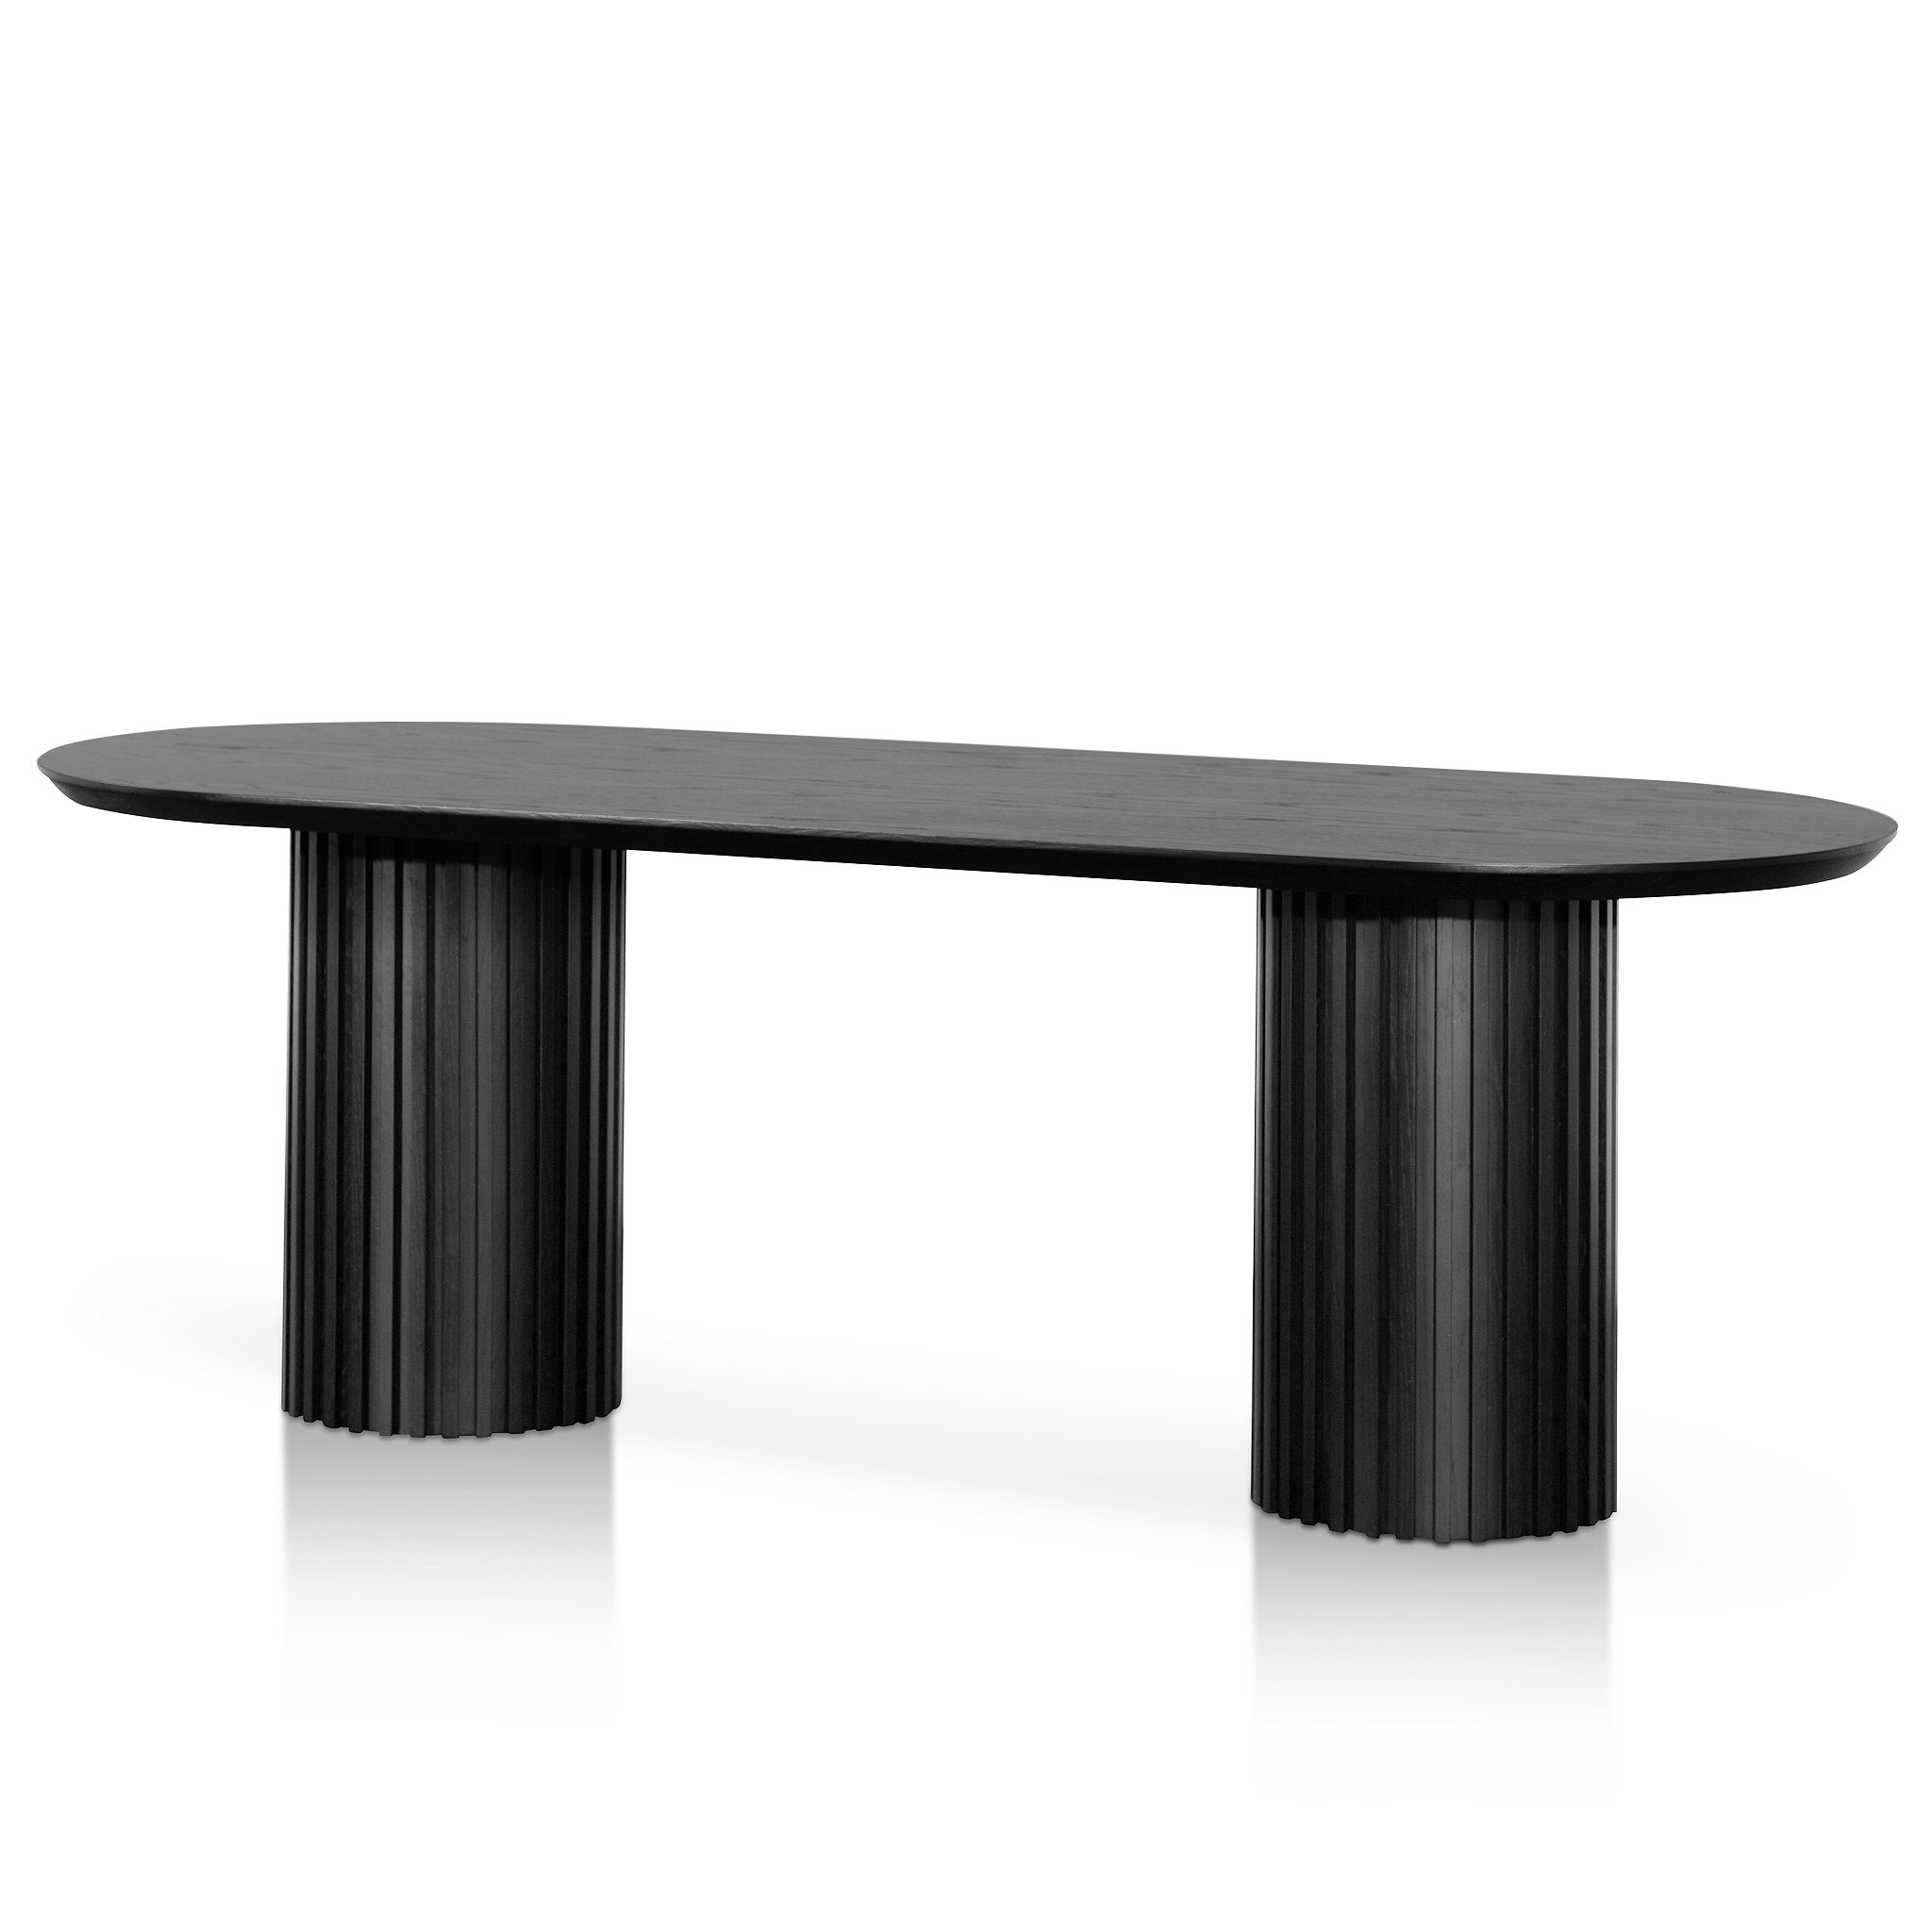 Vics 2.2m Wooden Dining Table - Black Oak - Dining Tables